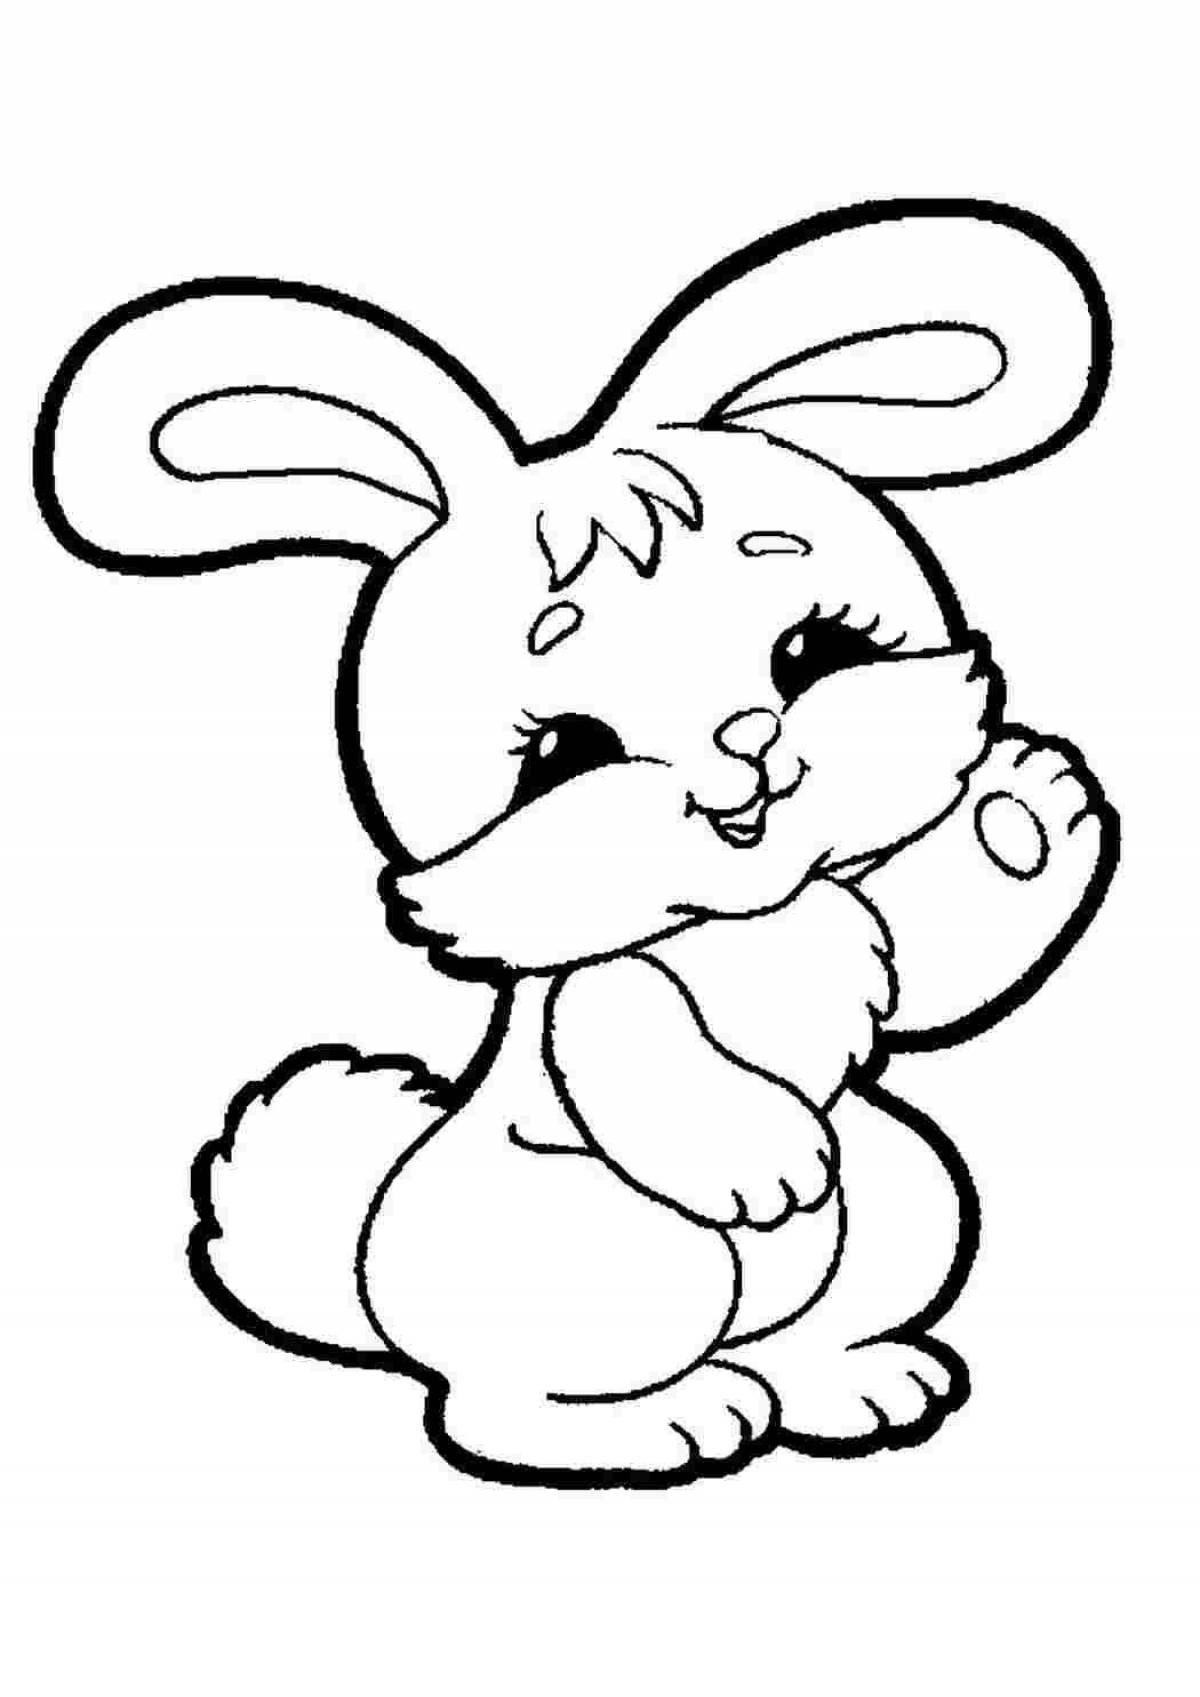 Snuggly coloring page bunny для детей 2-3 лет